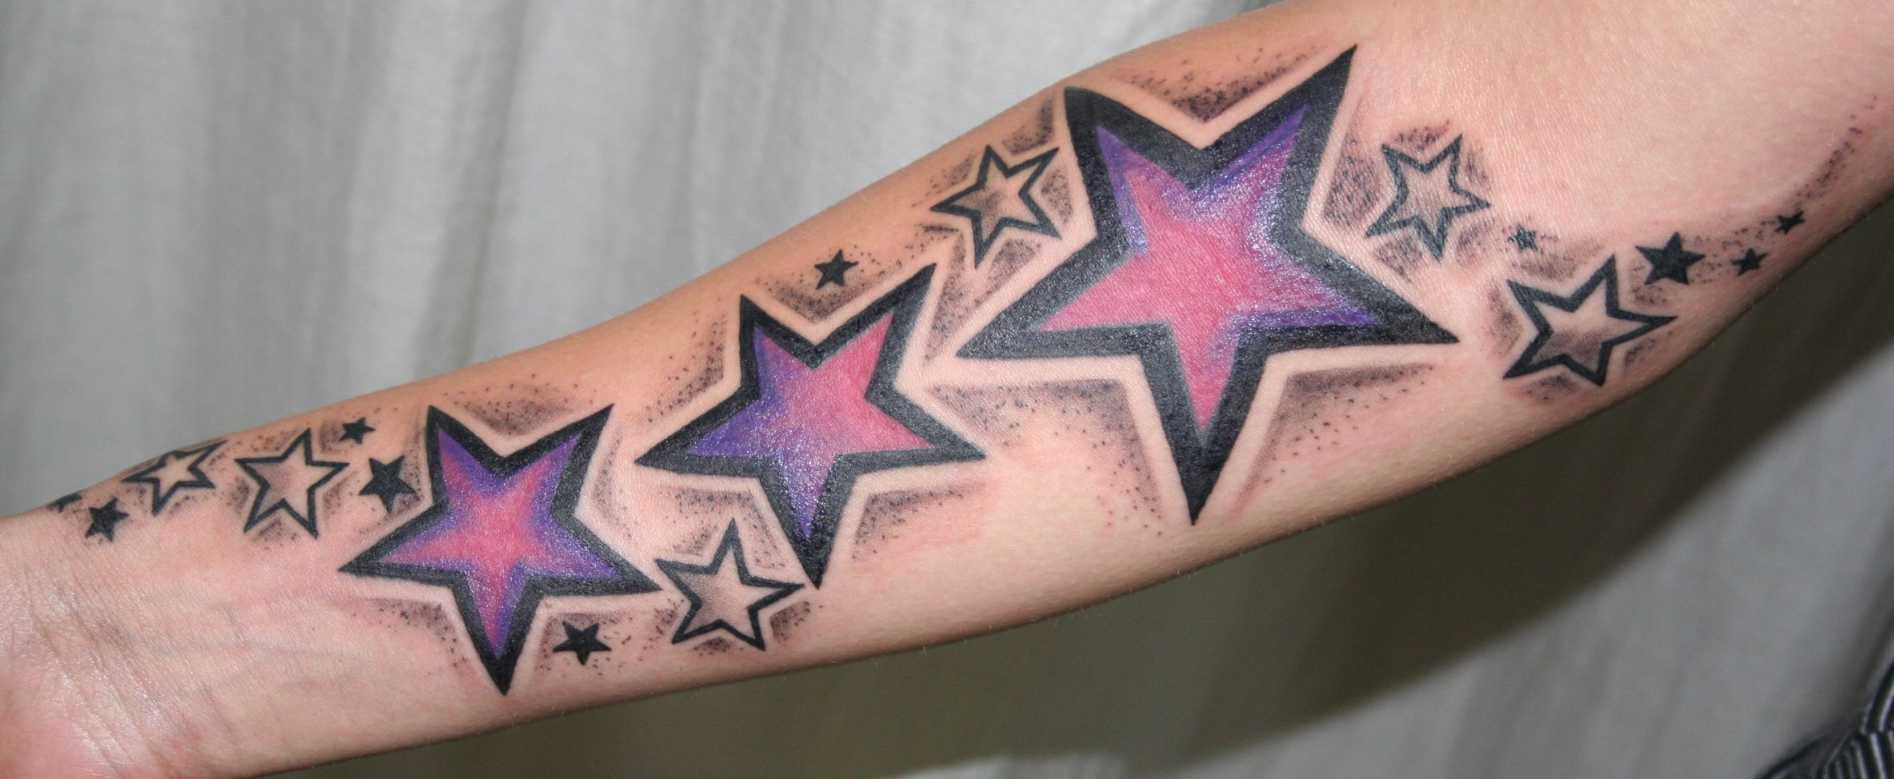 Stars Stars Stars TattooCover by Face-Tattoo on DeviantArt